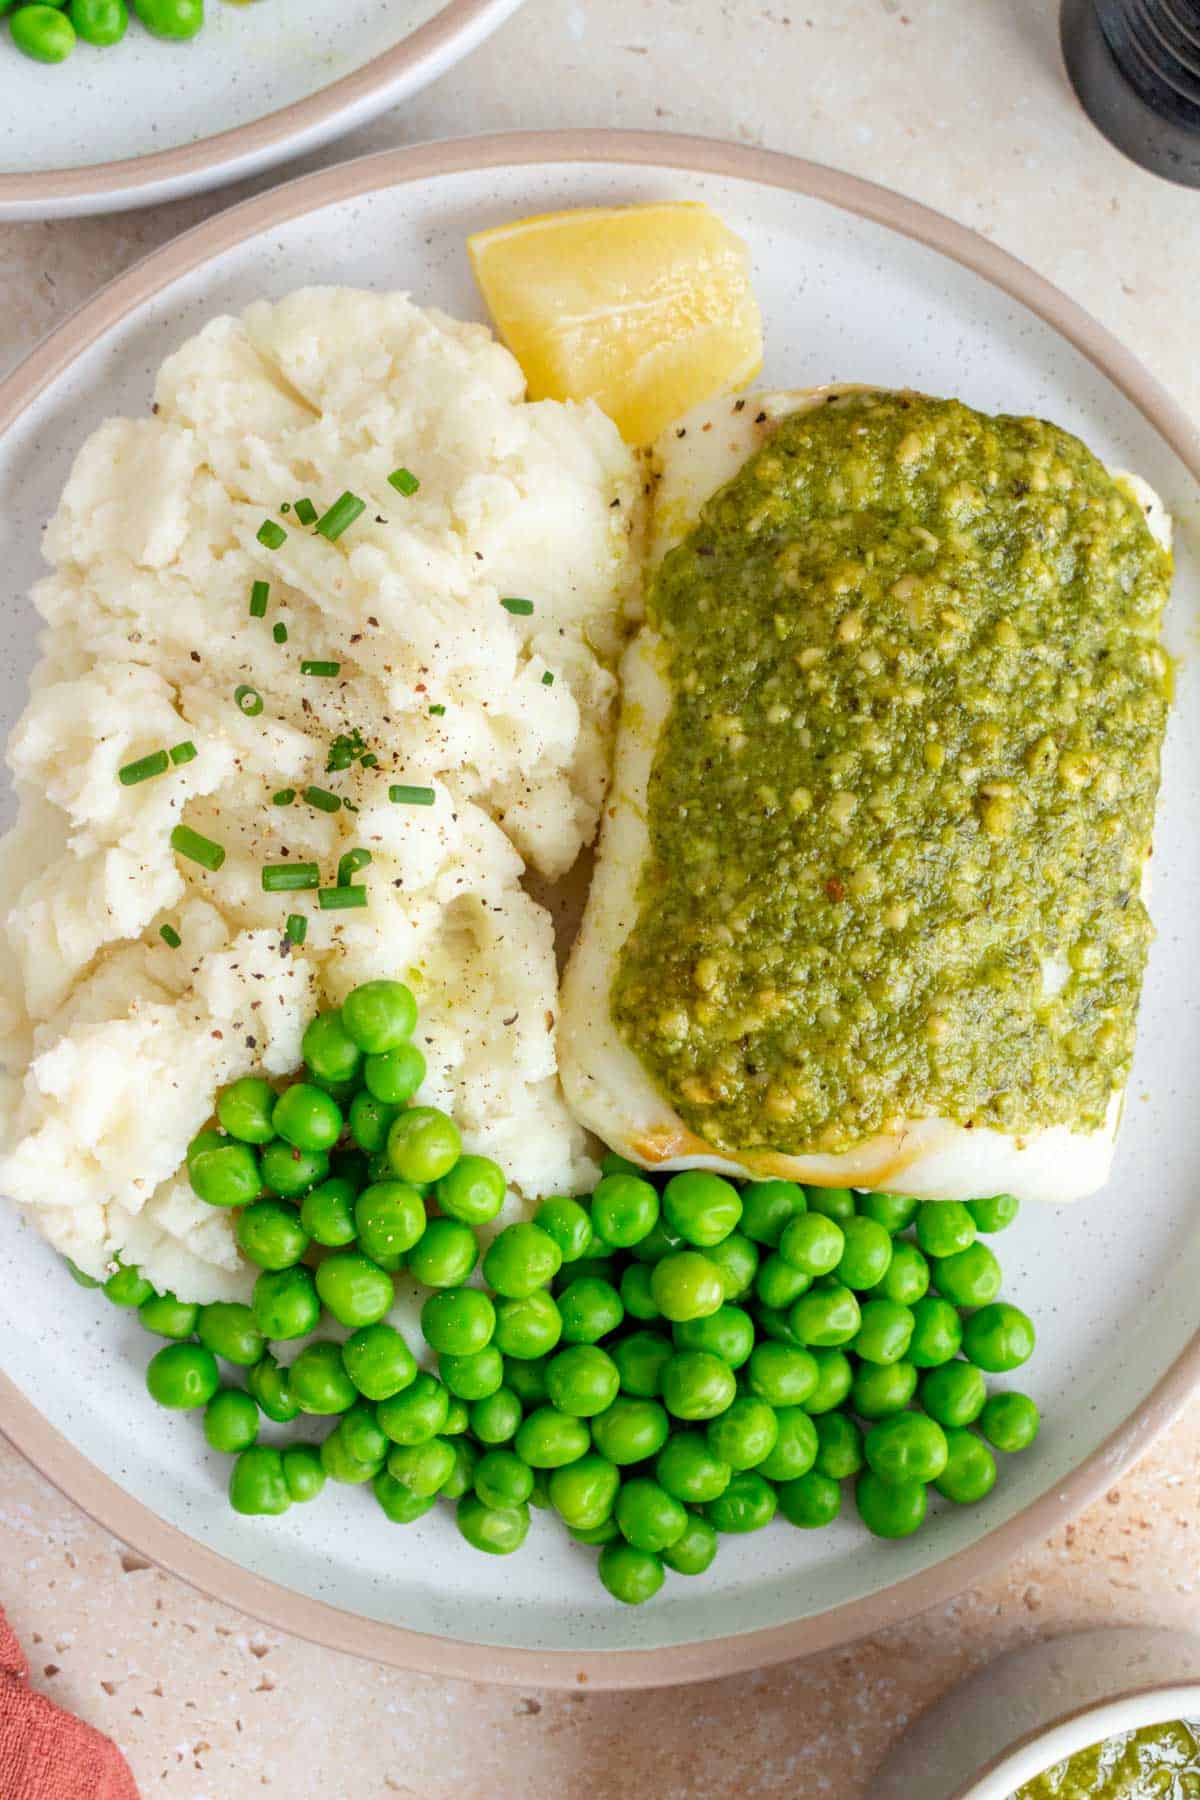 A plate with mashed potatoes, peas, pesto cod, and a lemon wedge.